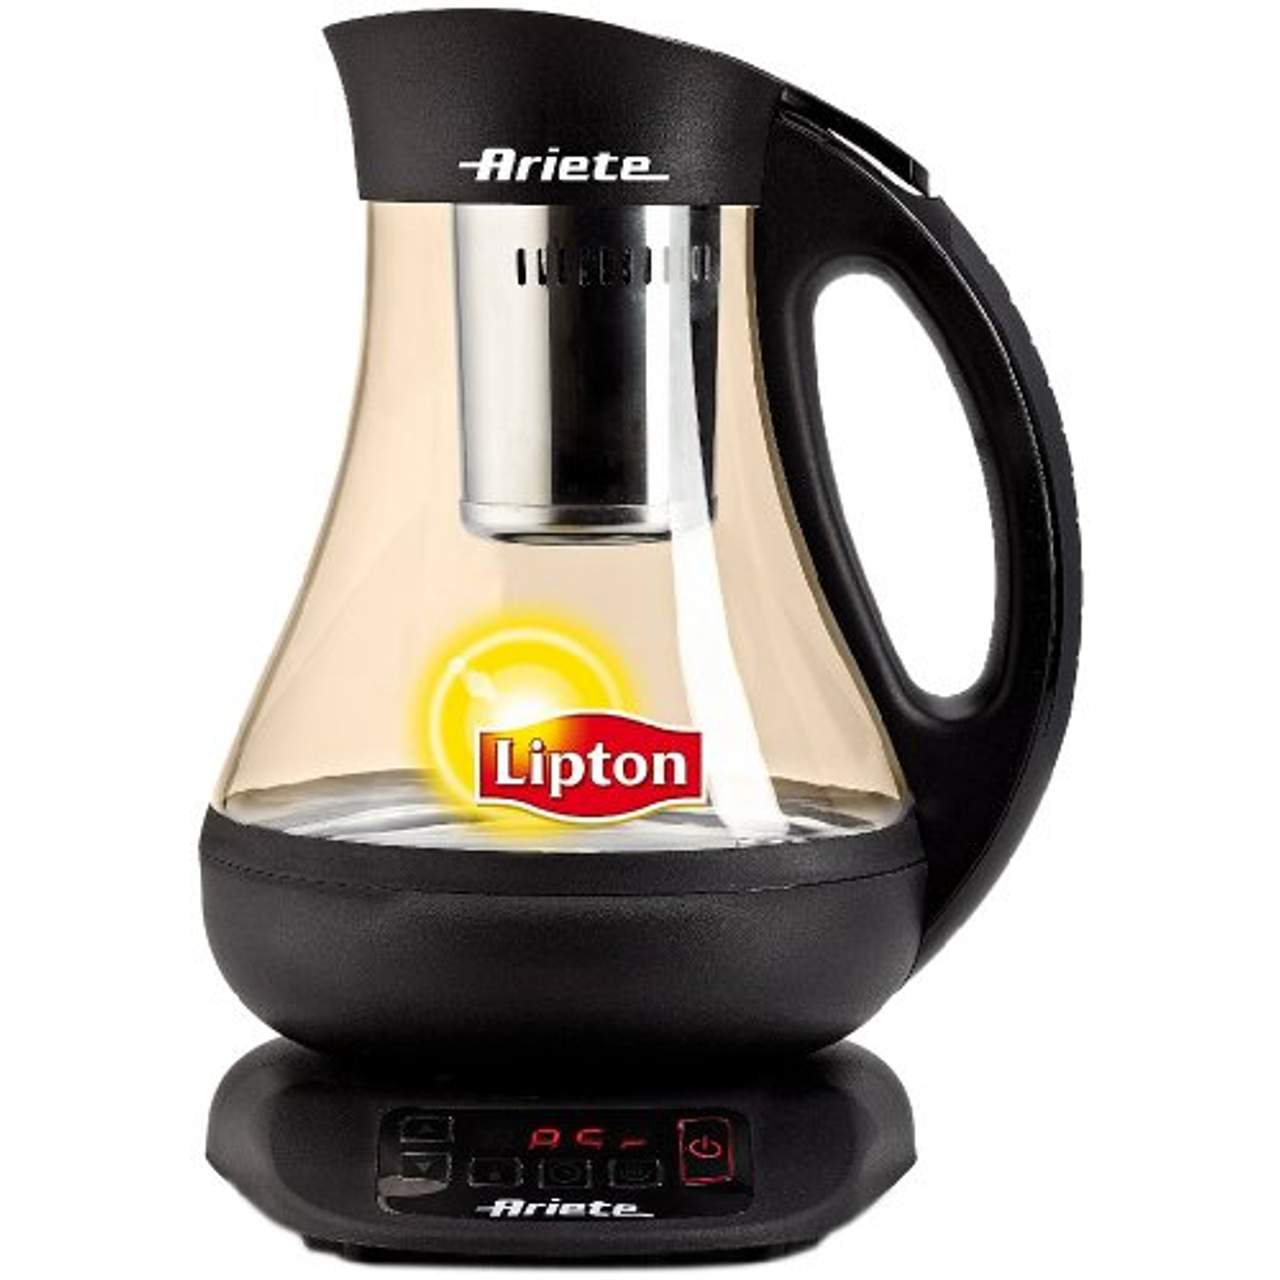 Ariete 2894 Automatic Tea Maker Lipton